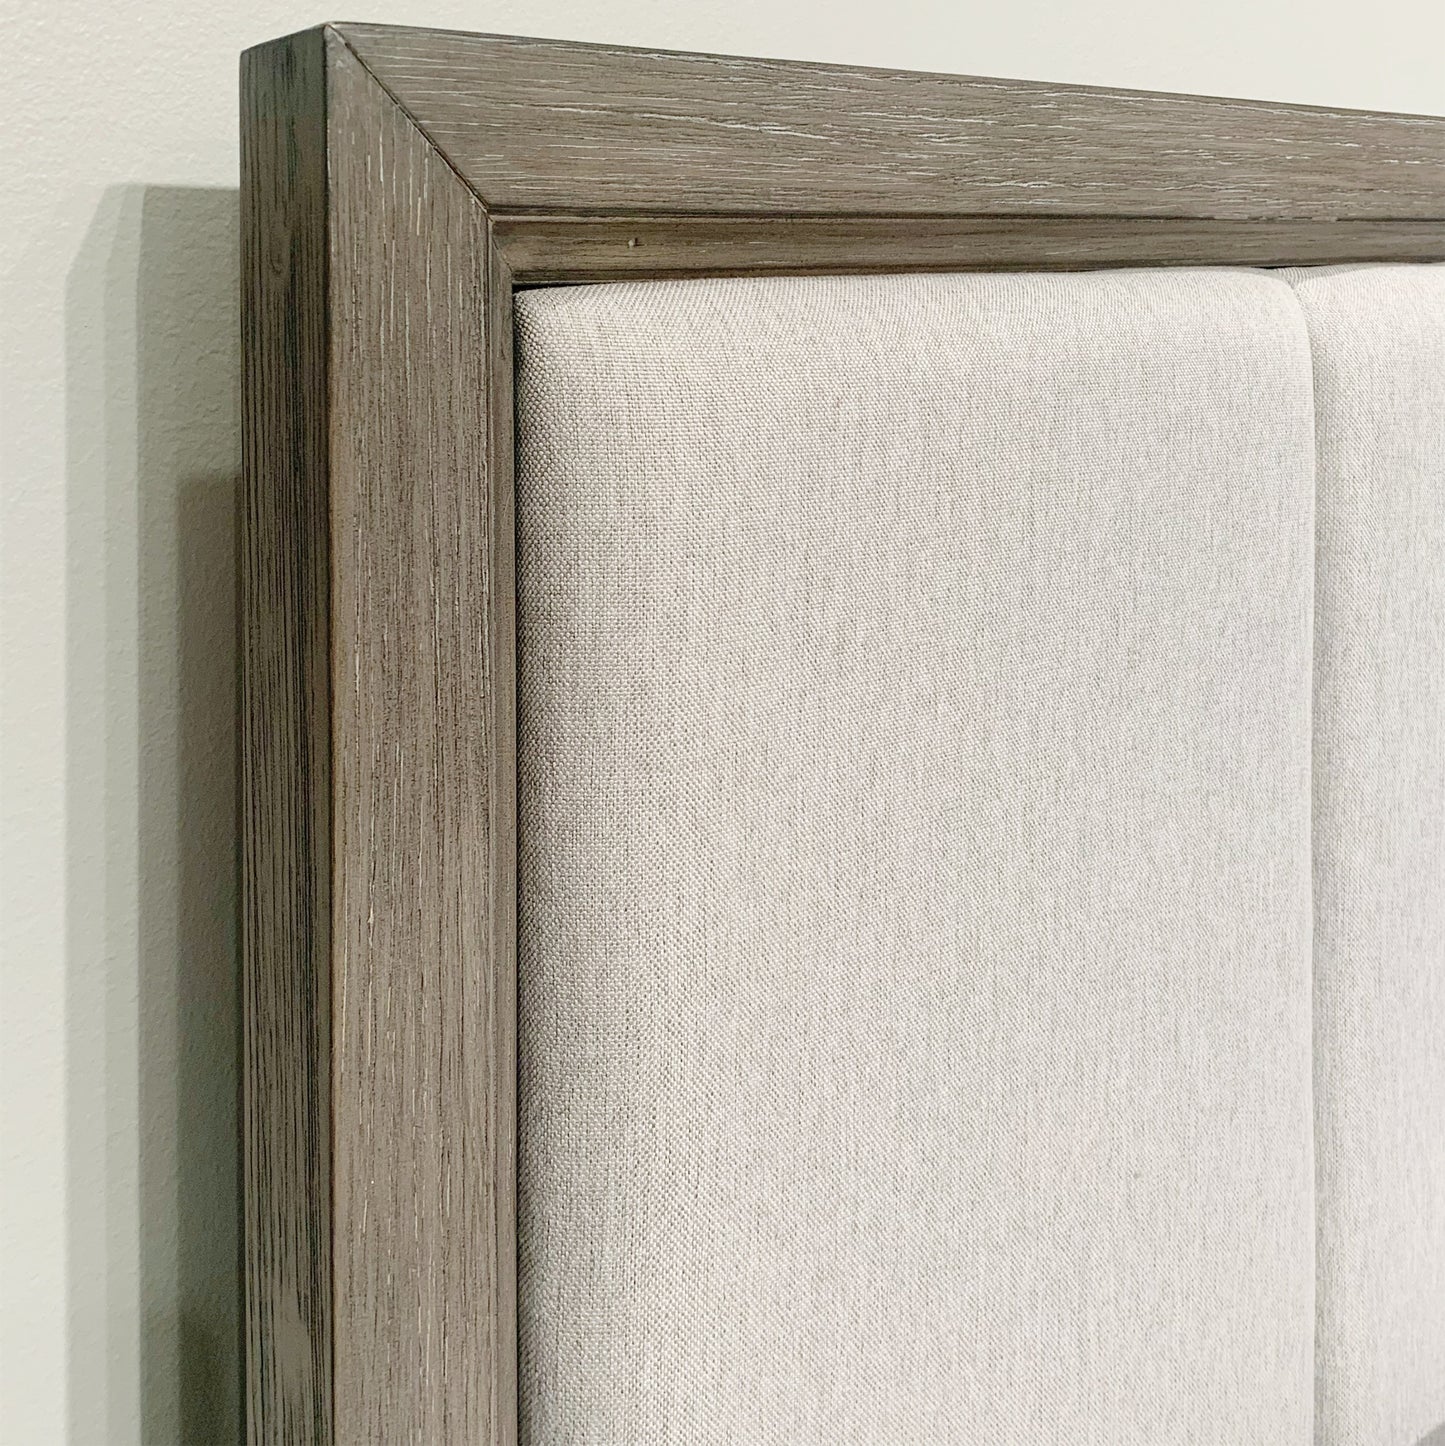 Ennesley Wood Upholstered Panel Bed Frame, Gray